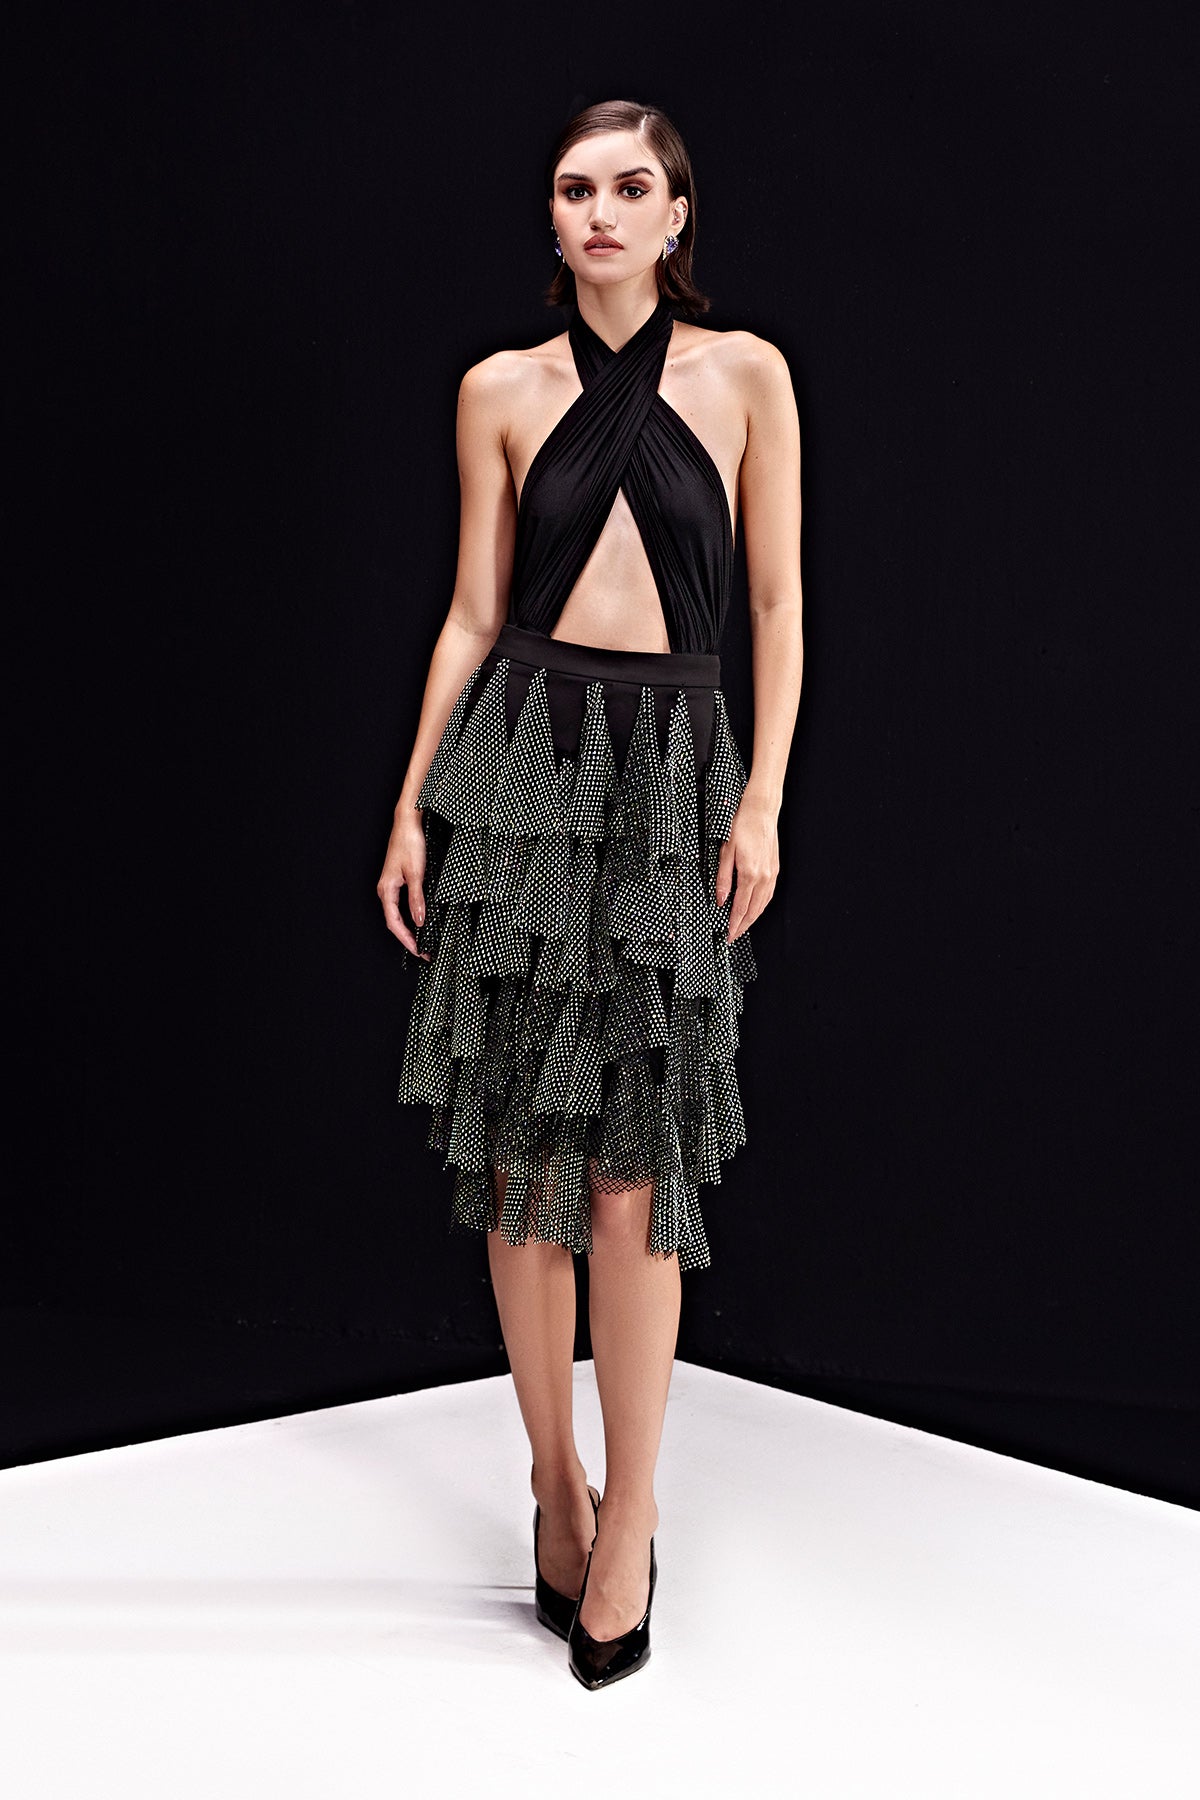 Casa-Reflect Rhinestone Skirt With Cross-Neck Top